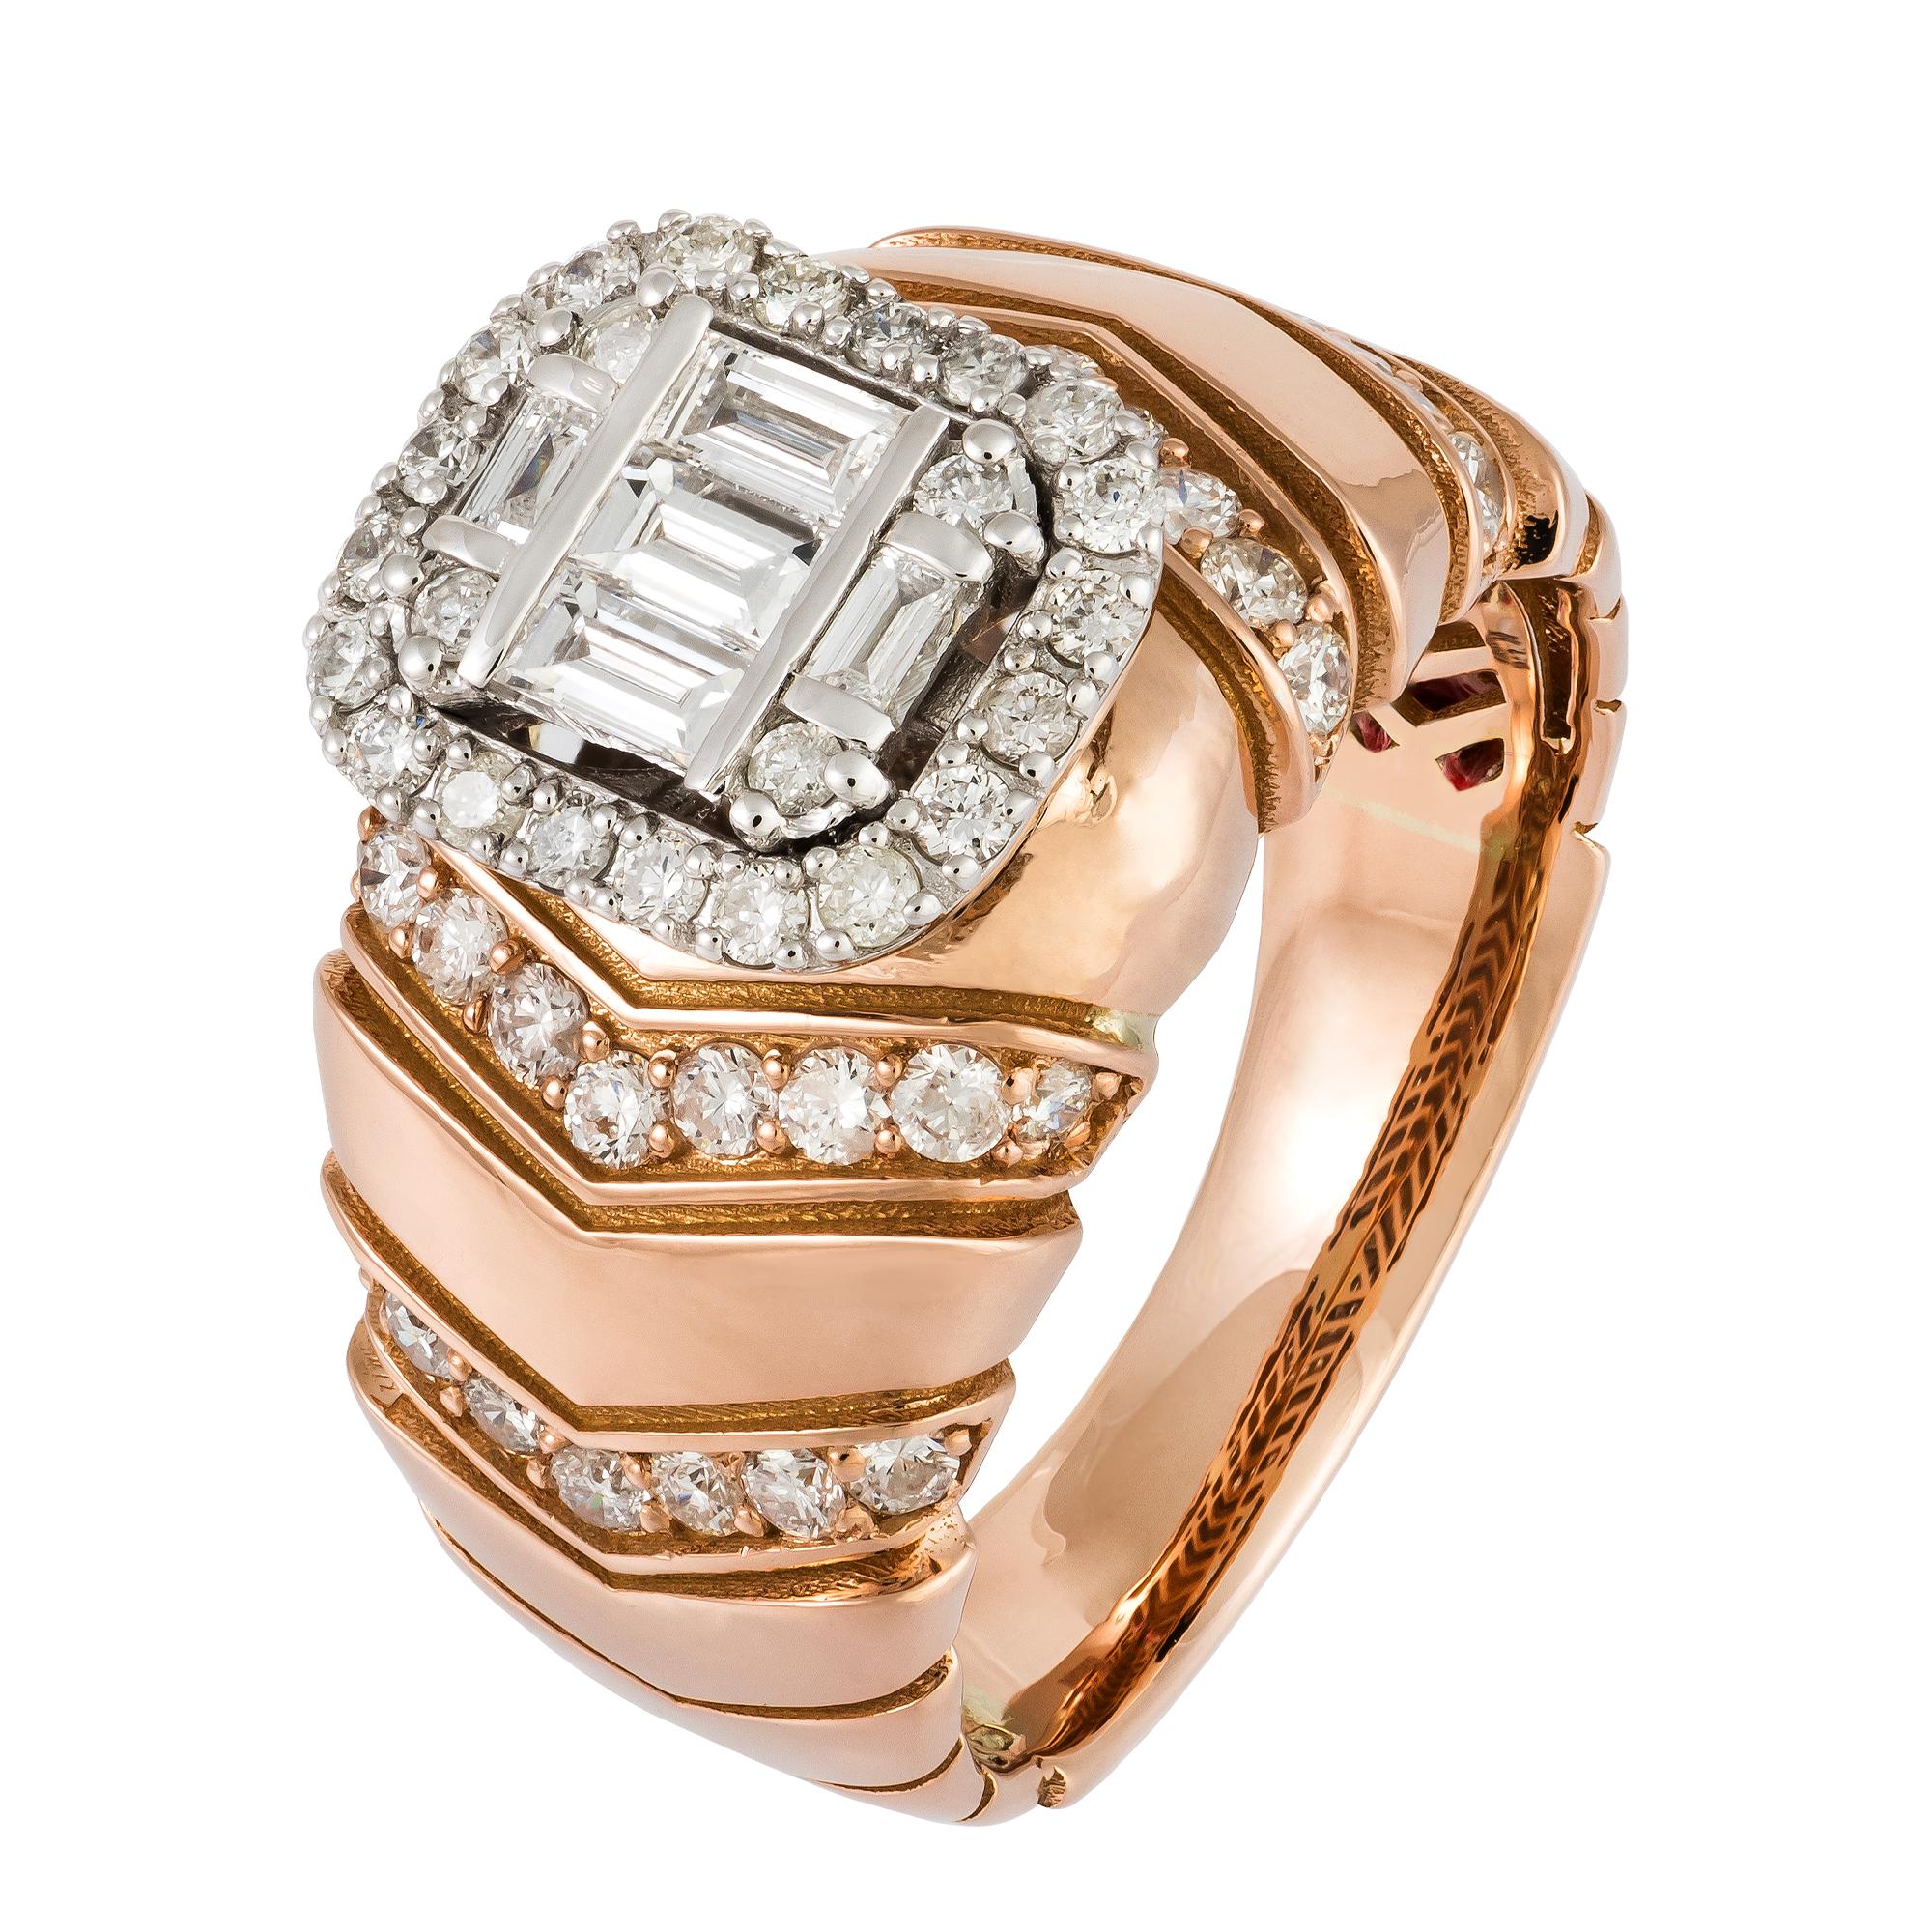 For Sale:  Impressive White Pink 18K Gold White Diamond Ring for Her 3